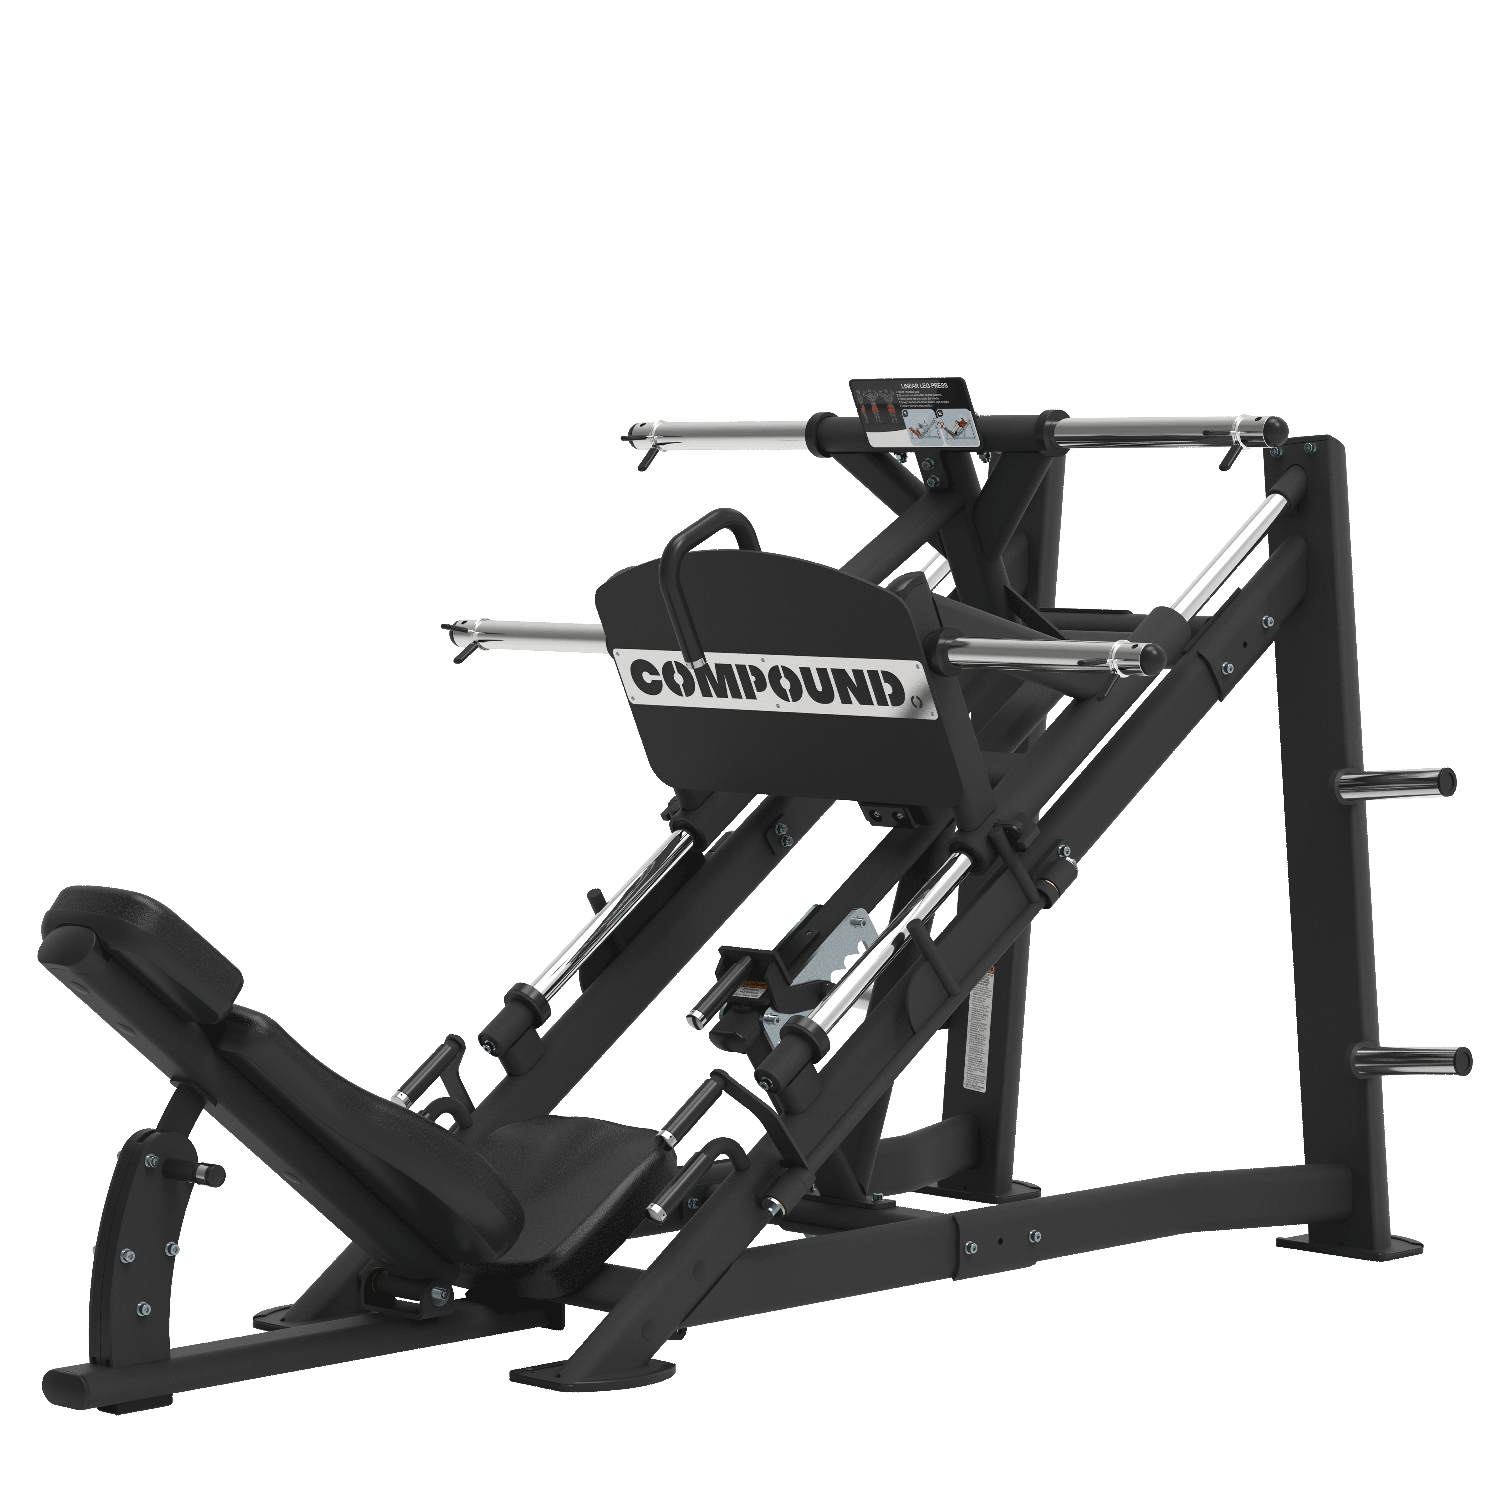 Platinum Series -45 Degree Leg Press | COMPOUND Fitness Equipment ...